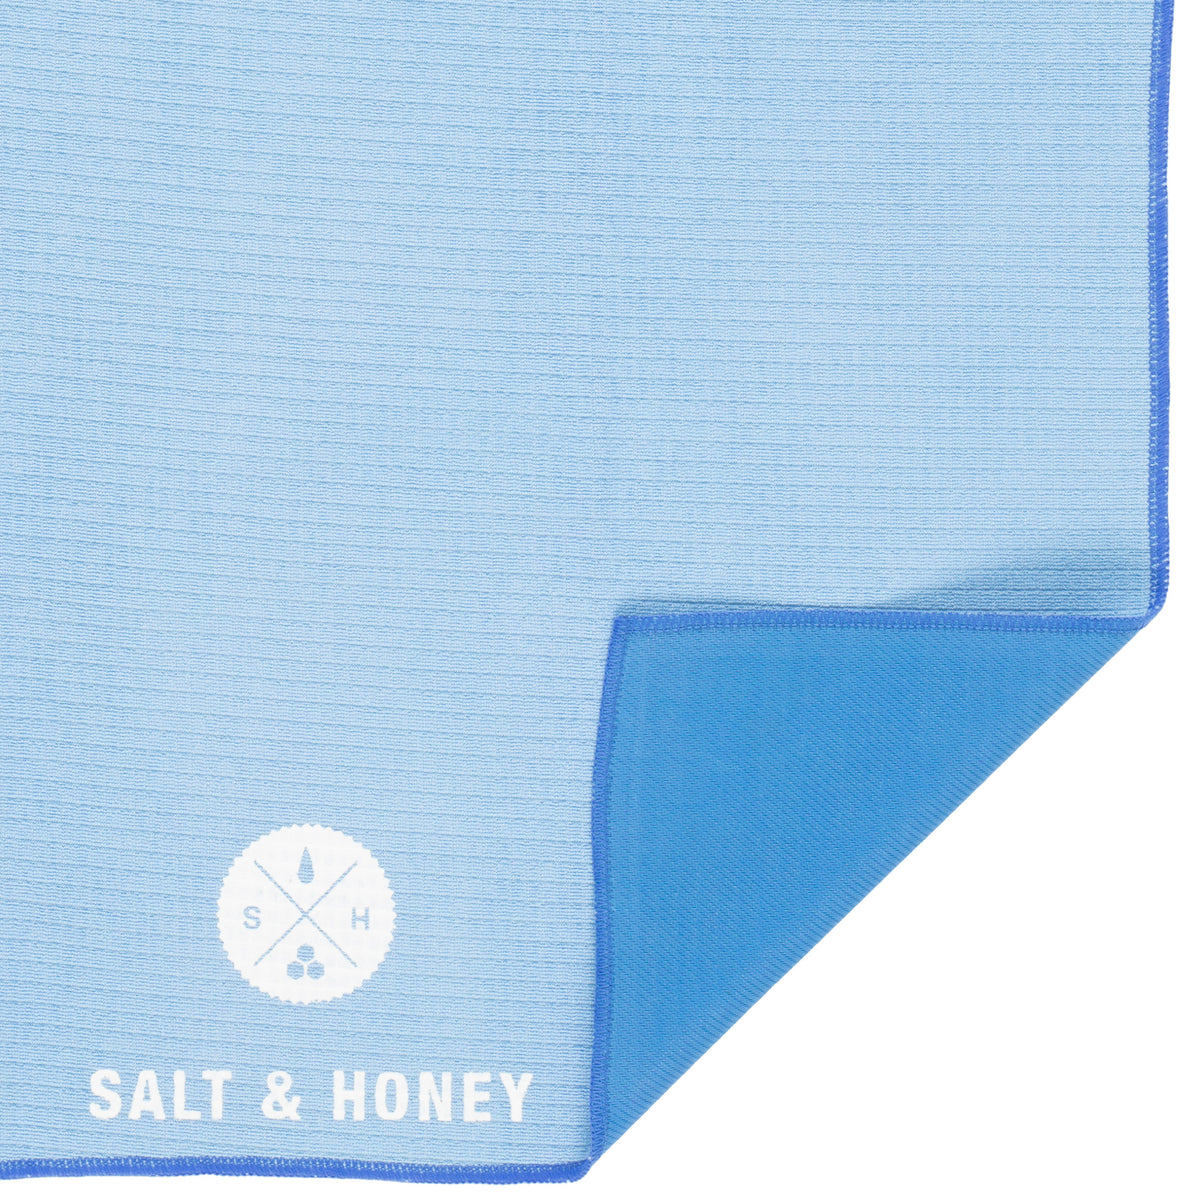 NEW Salt & Honey Non-Slip Pilates Reformer Workout Towel and Mat - Gray